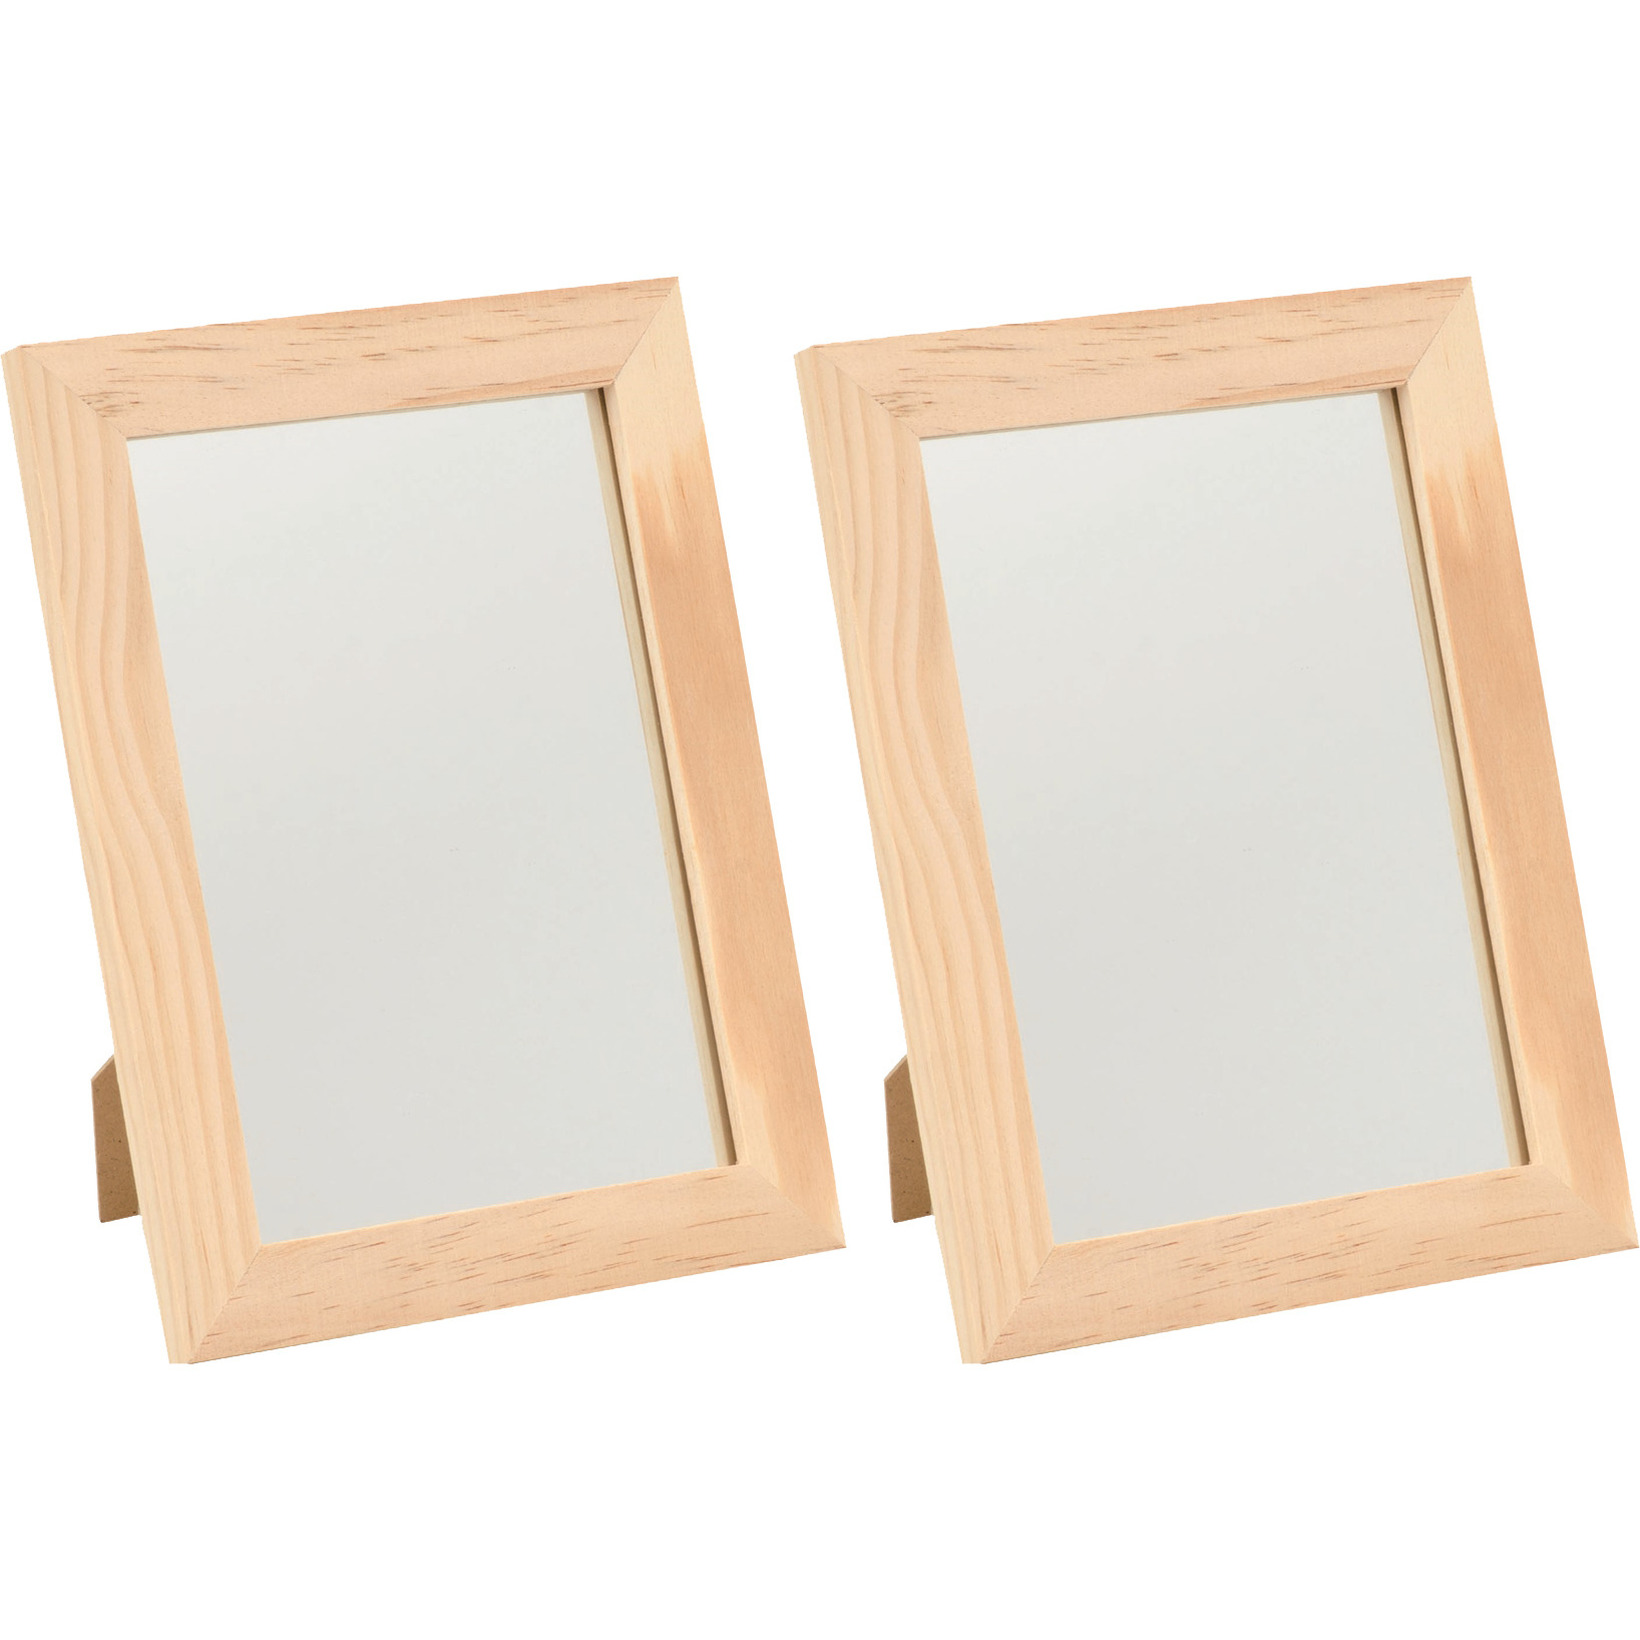 2x Houten spiegels 29 x 34,5 cm DIY hobby-knutselmateriaal